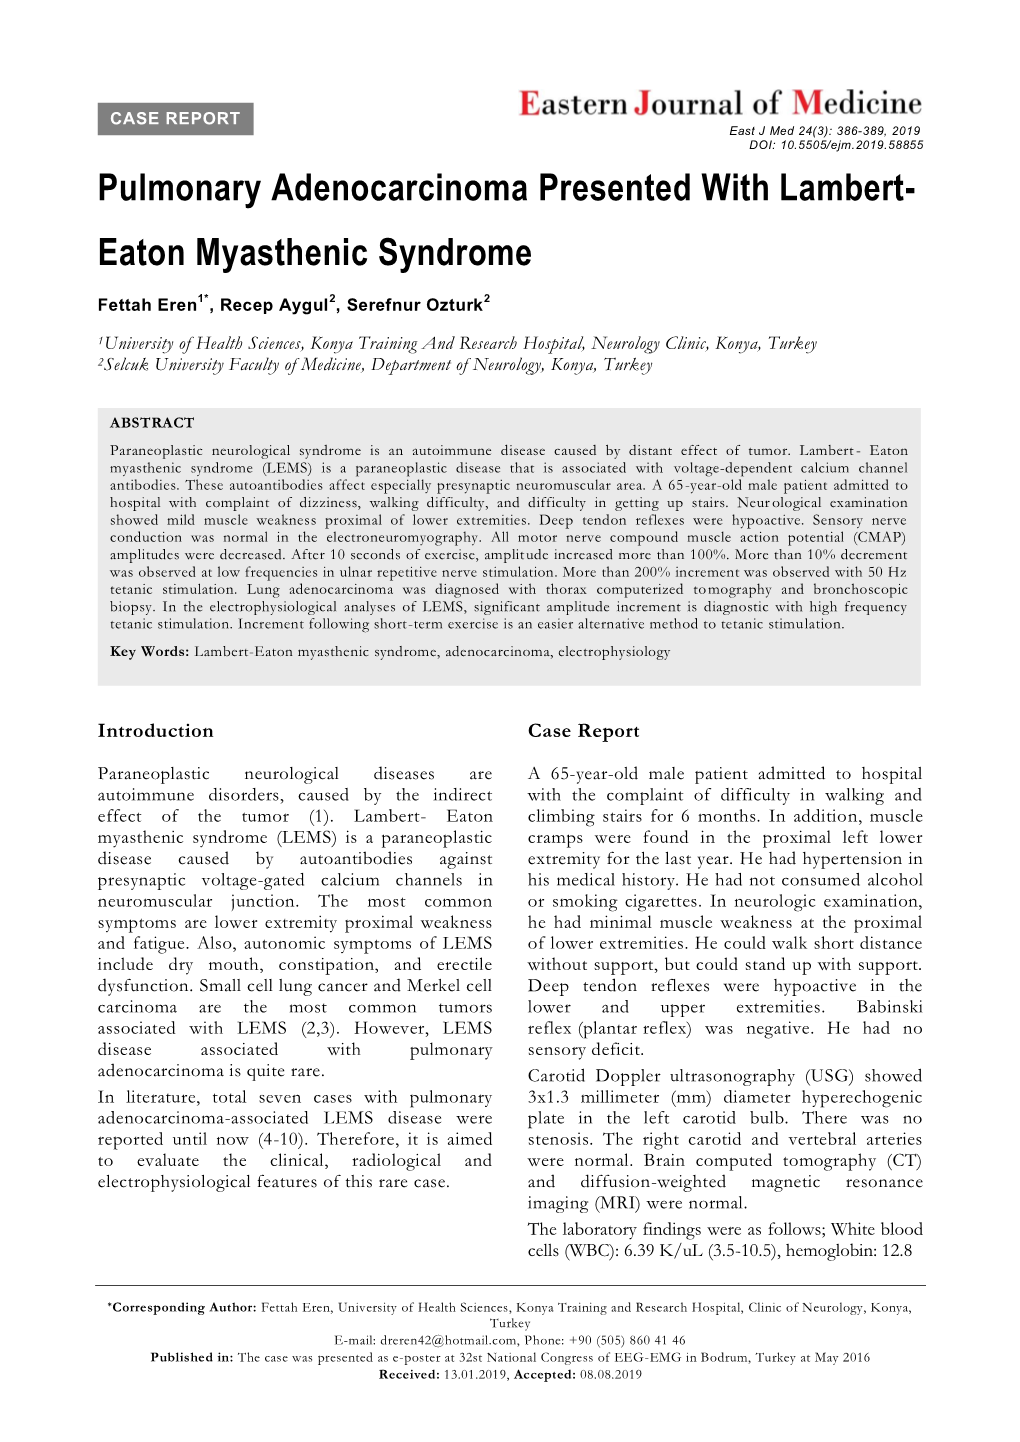 Pulmonary Adenocarcinoma Presented with Lambert- Eaton Myasthenic Syndrome